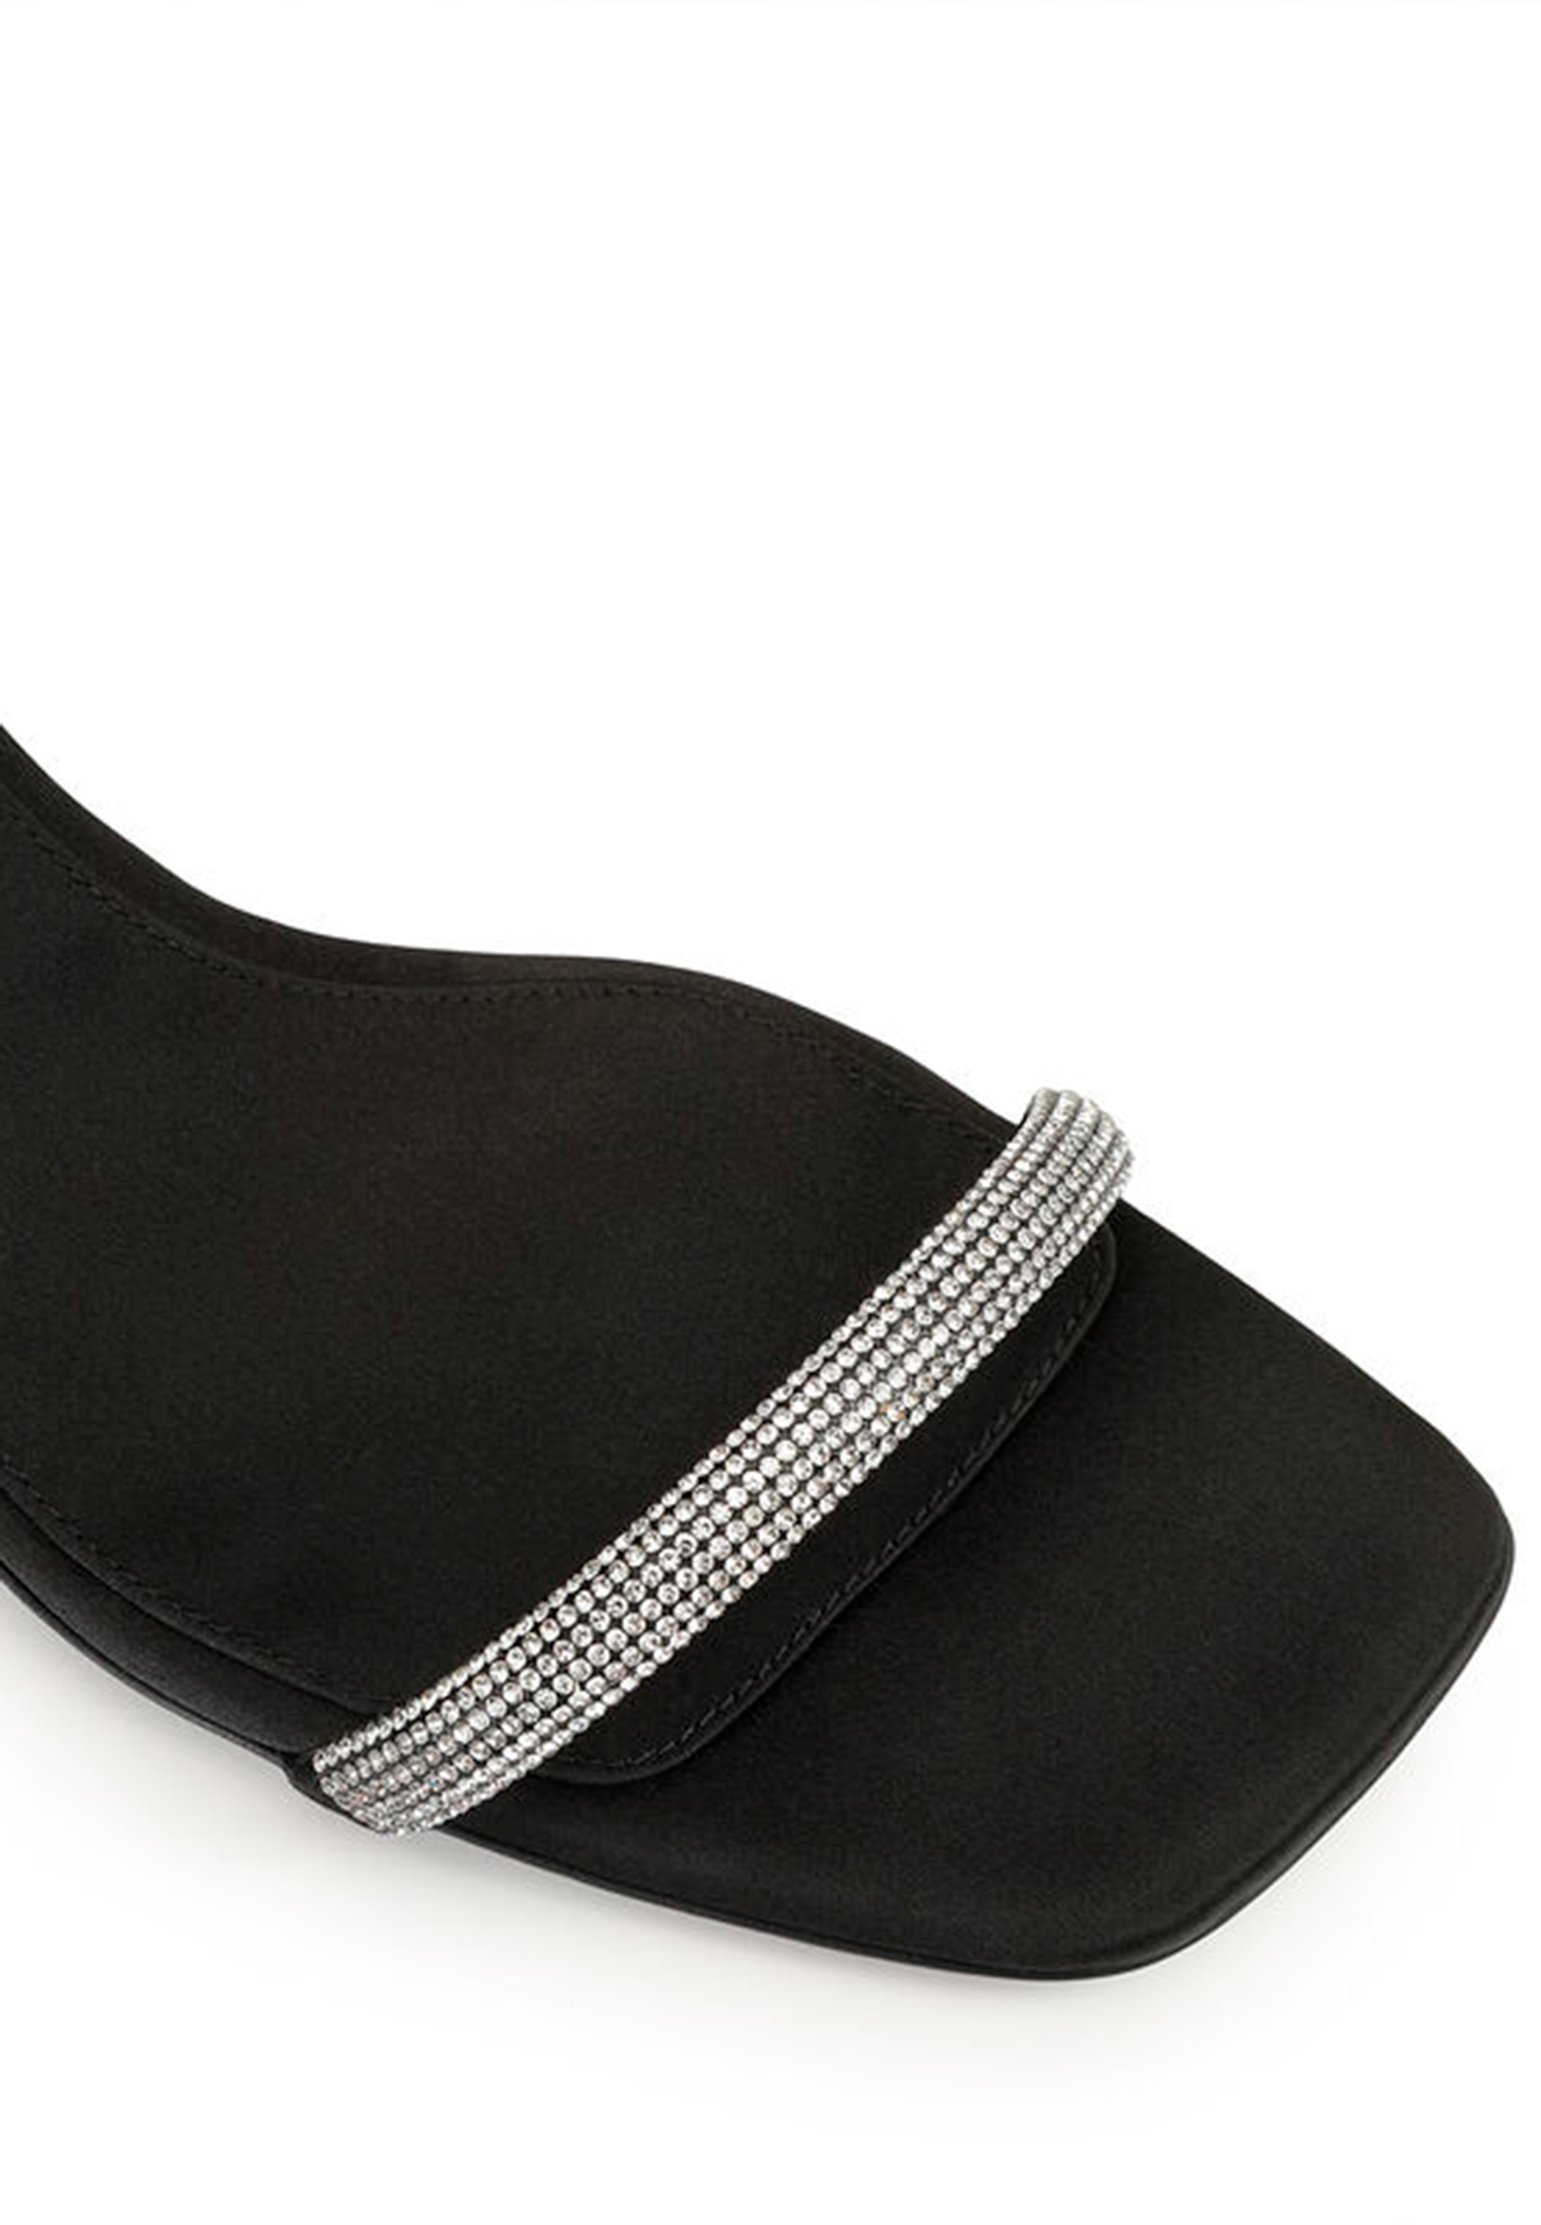 Sandal SERGIO ROSSI Color: black (Code: 1872) in online store Allure